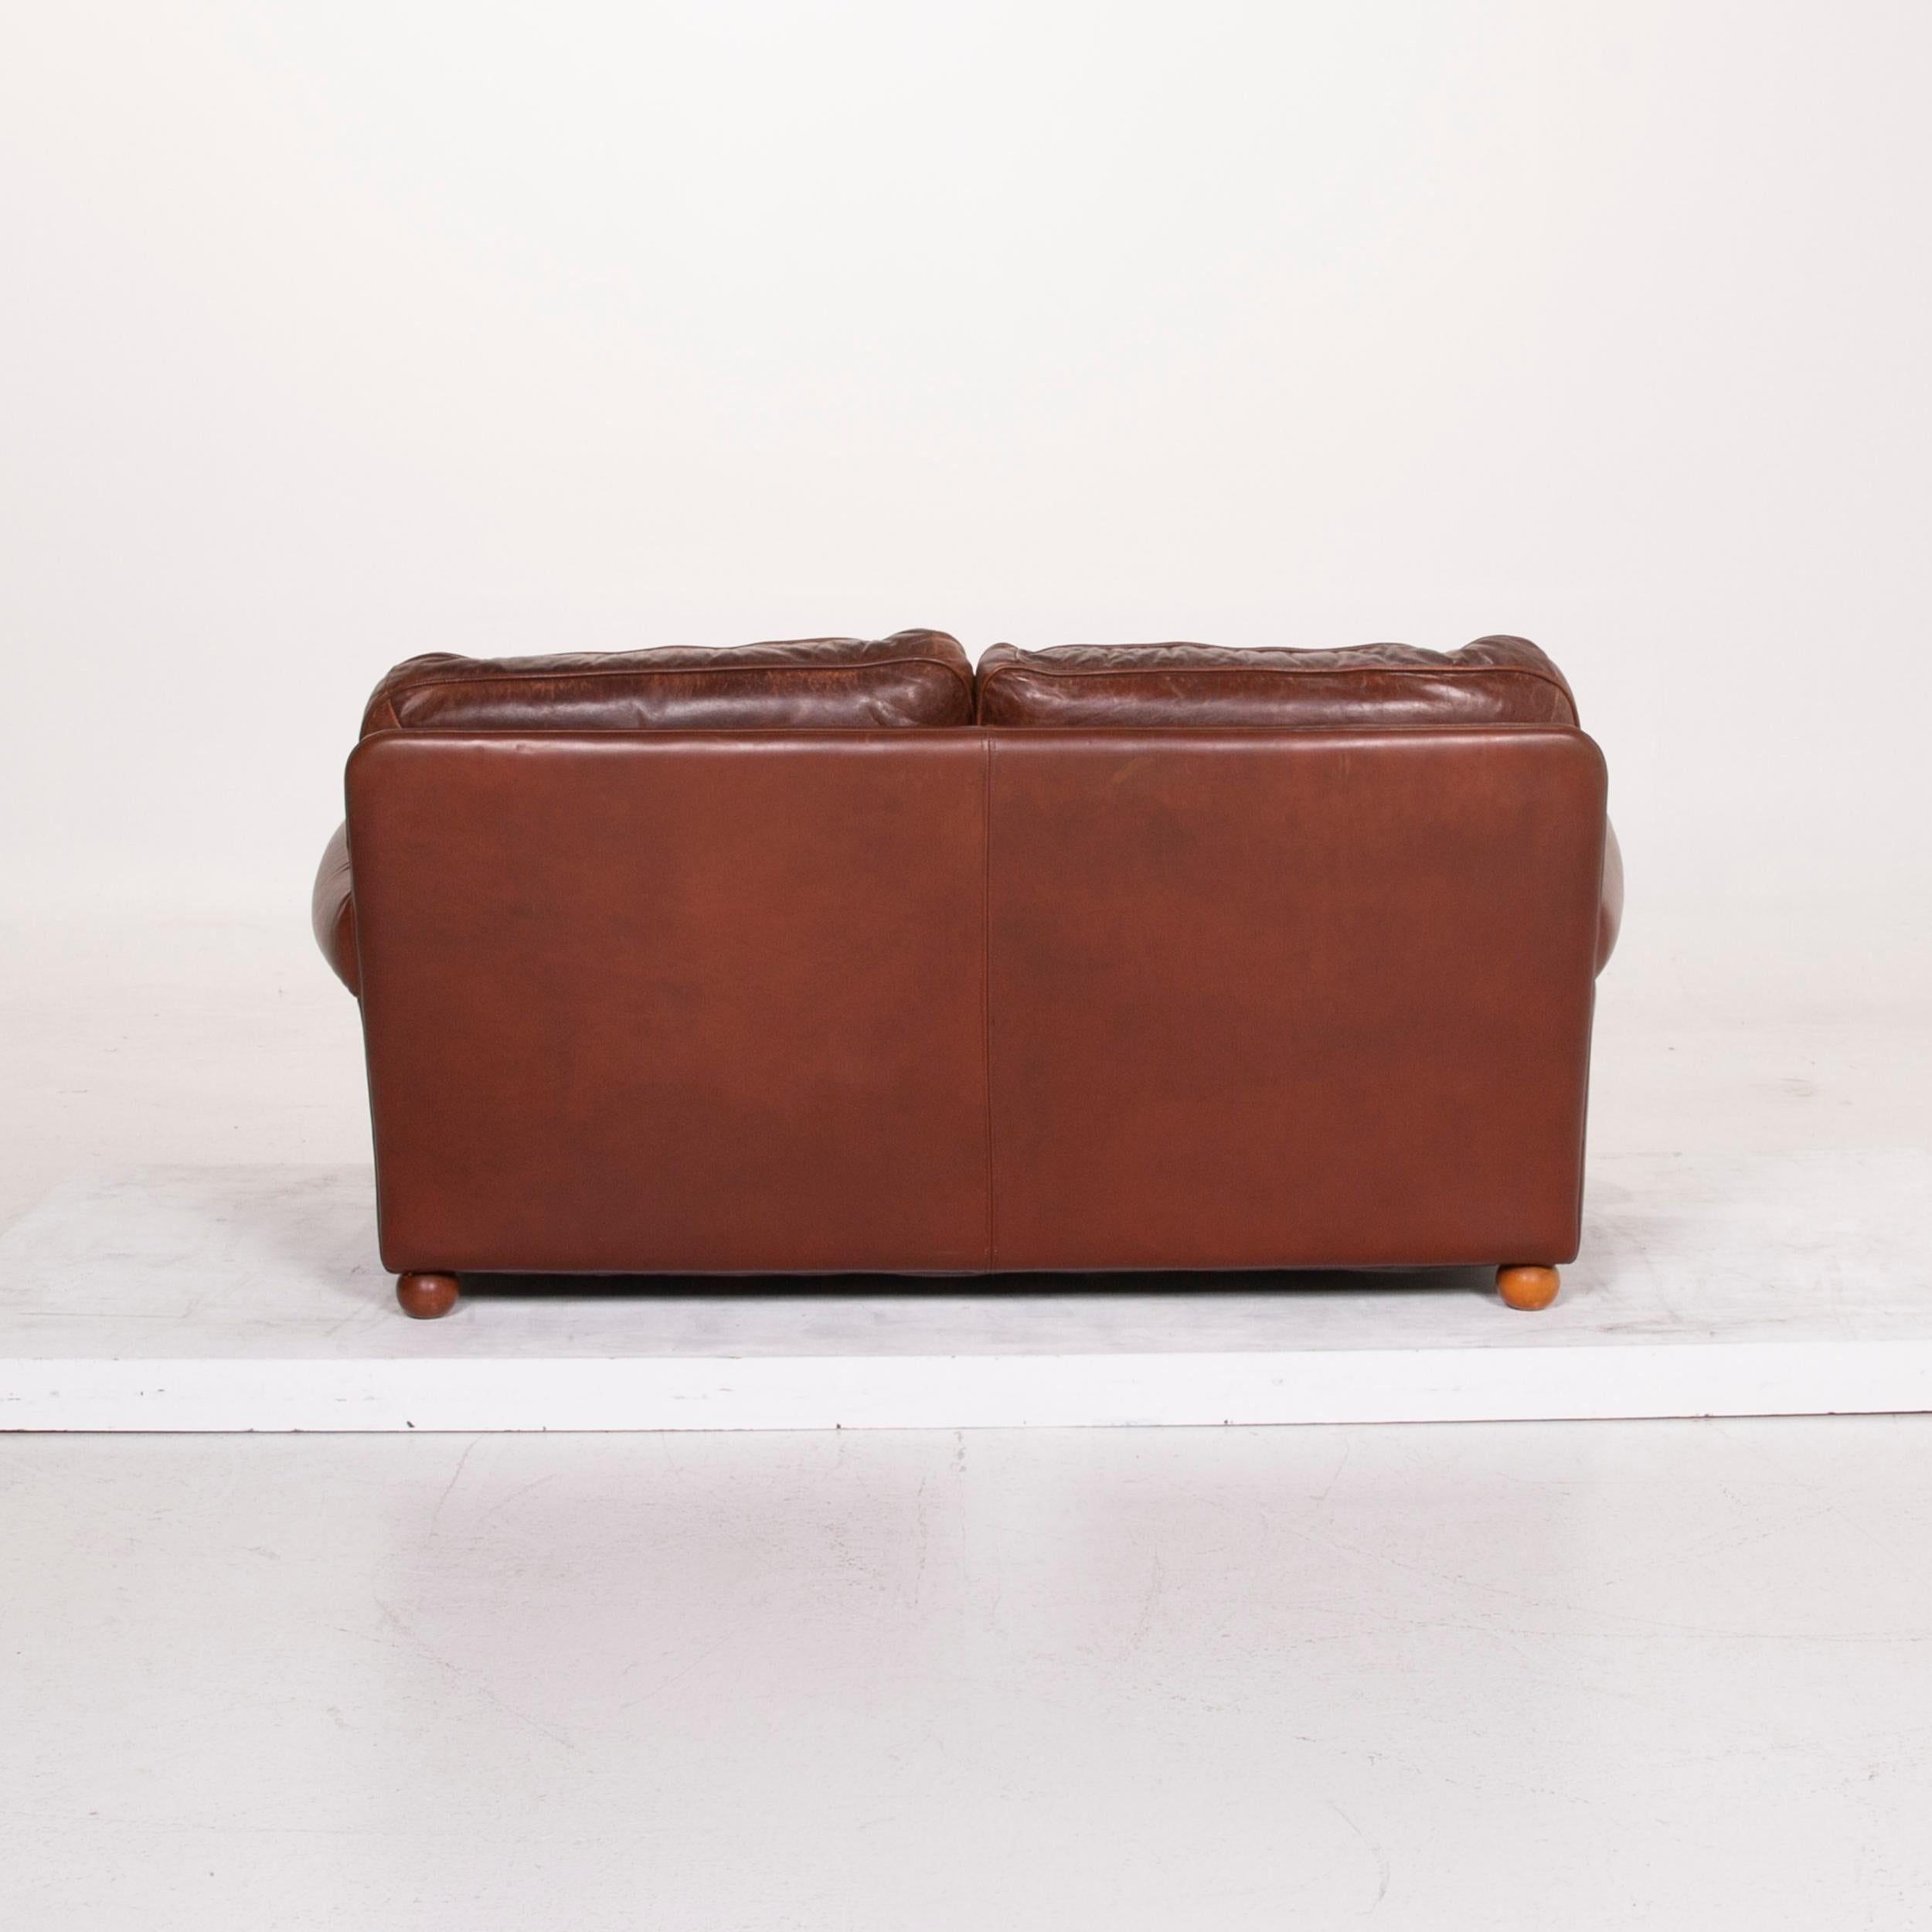 Poltrona Frau Leather Sofa Set Cognac Two-Seat Stool For Sale 4